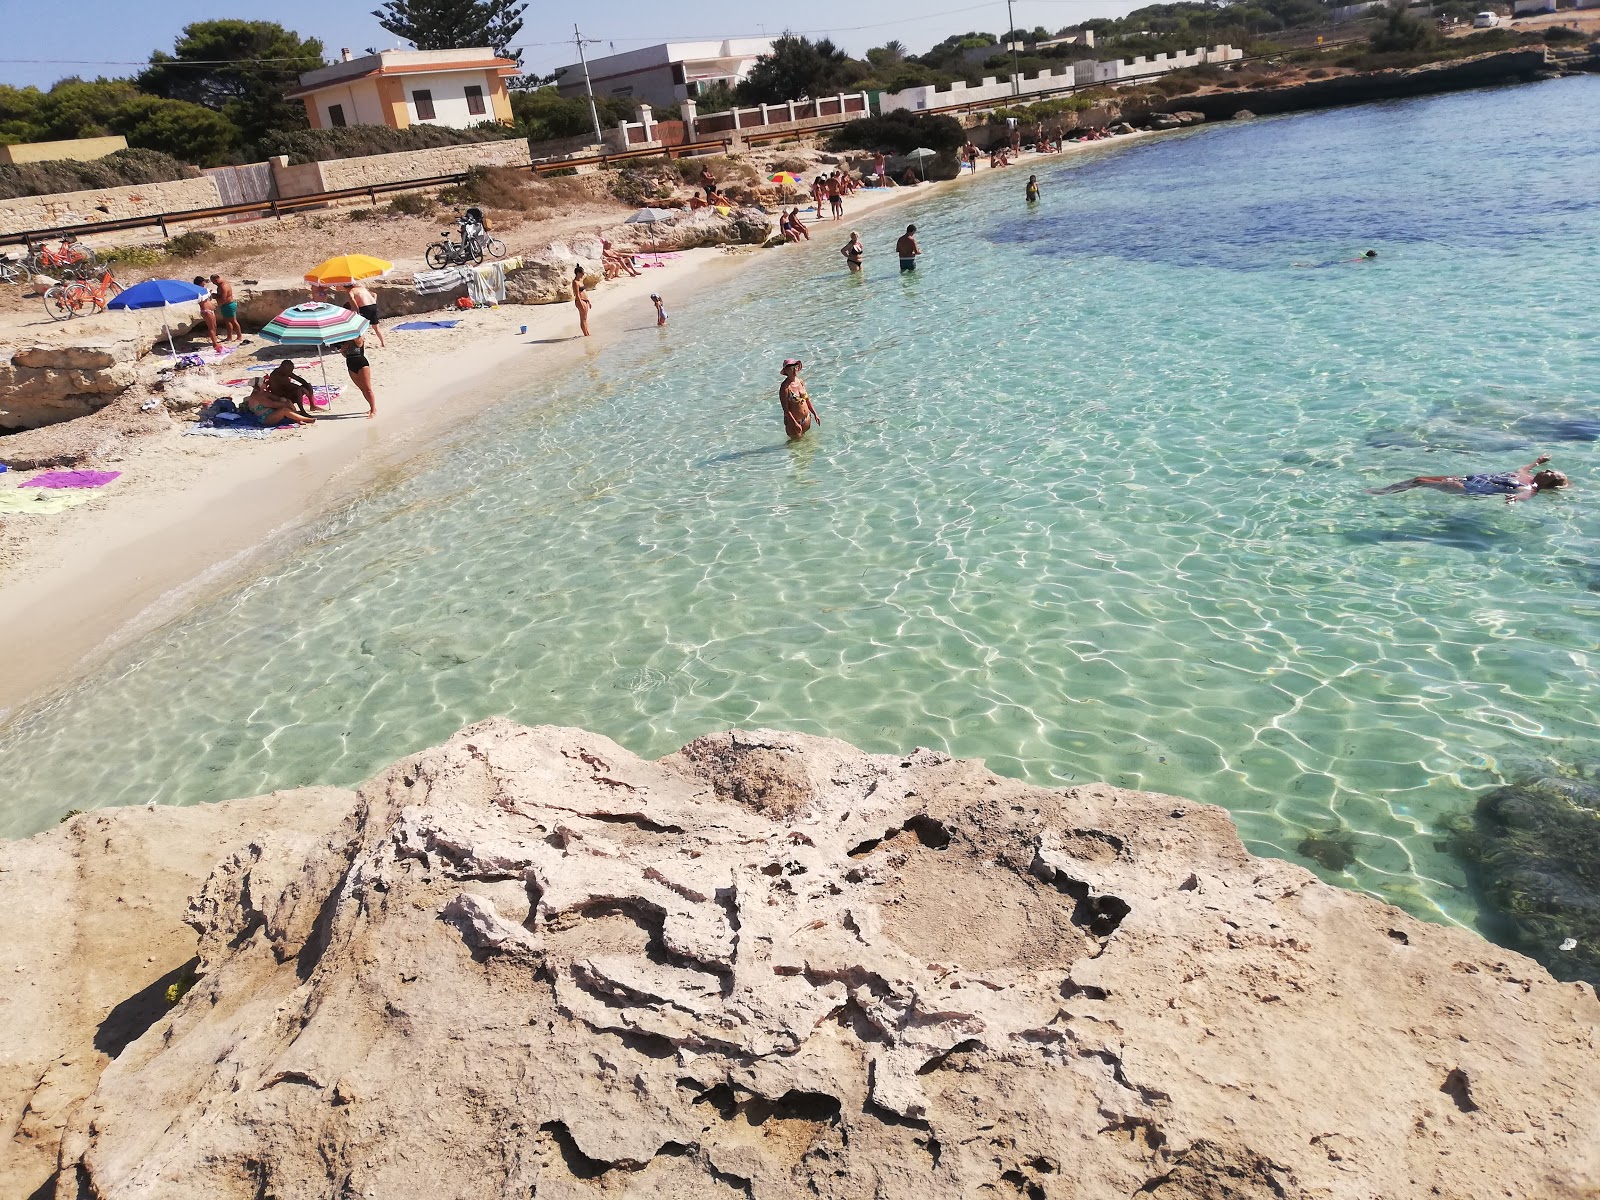 Photo of Spiaggia Di Calamoni with small multi bays